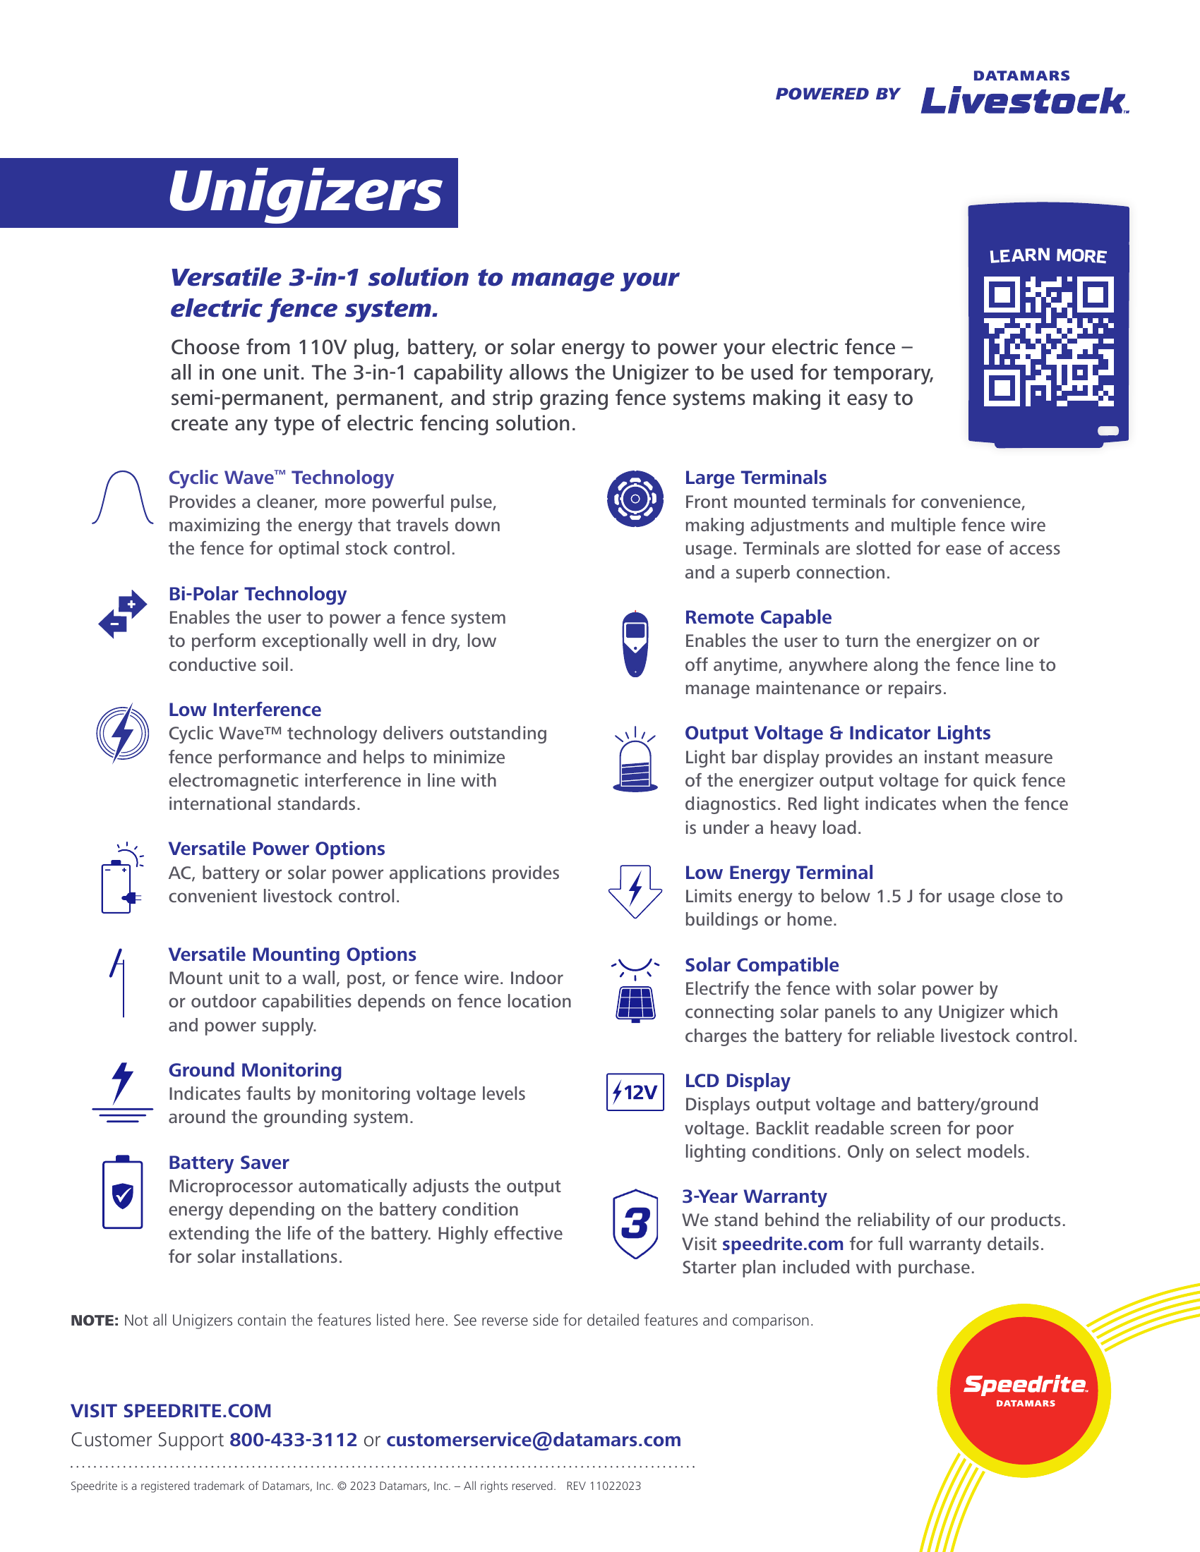 Speedrite-Unigizers-Info-Sheet.png